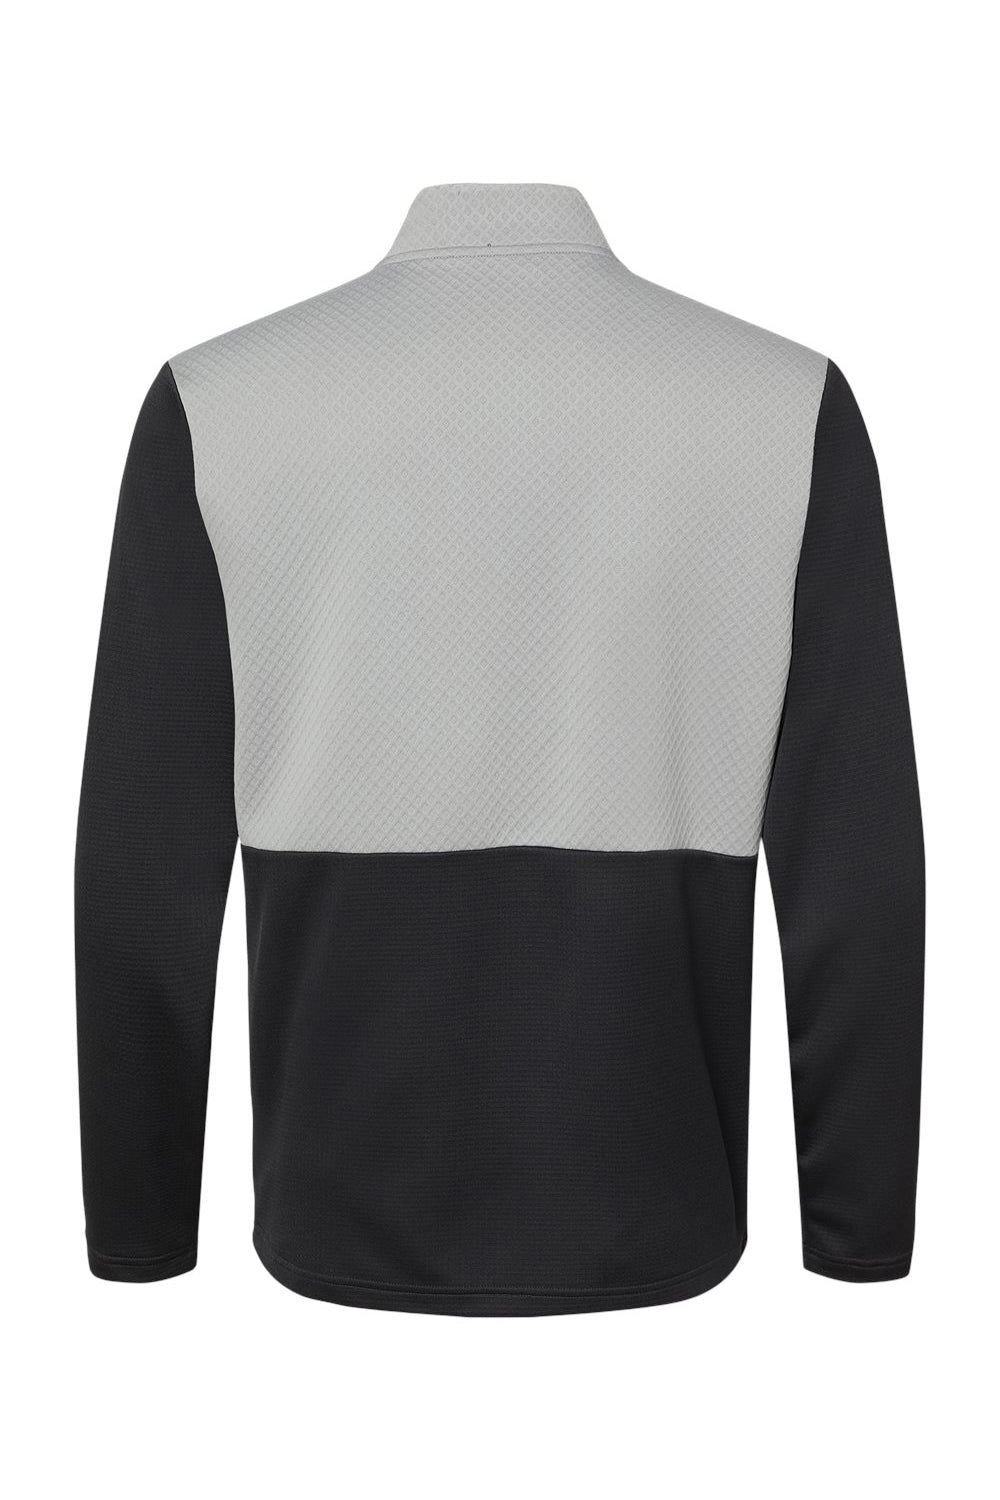 Adidas A532 Mens Textured Mixed Media 1/4 Zip Sweatshirt Black/Grey Flat Back